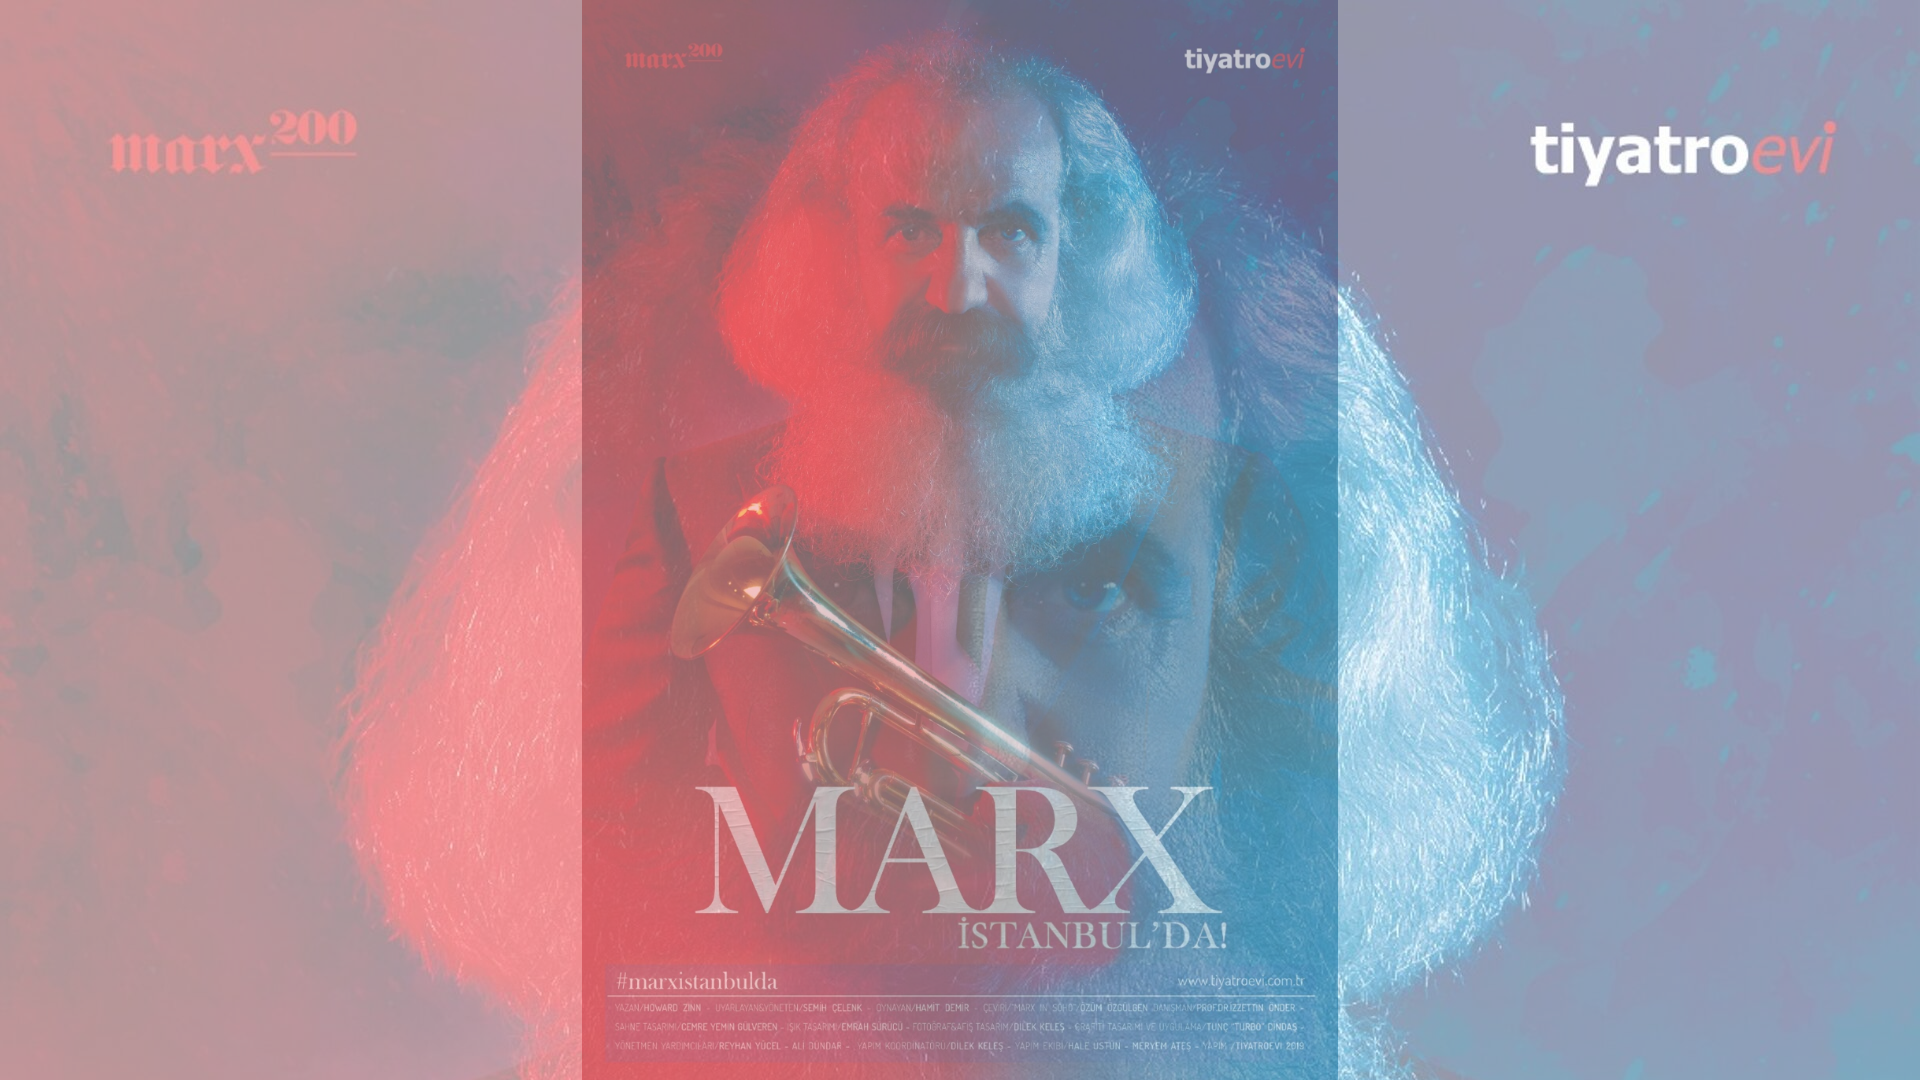 Karl Marx’a iade-i itibar: “Marx İstanbul’da!”